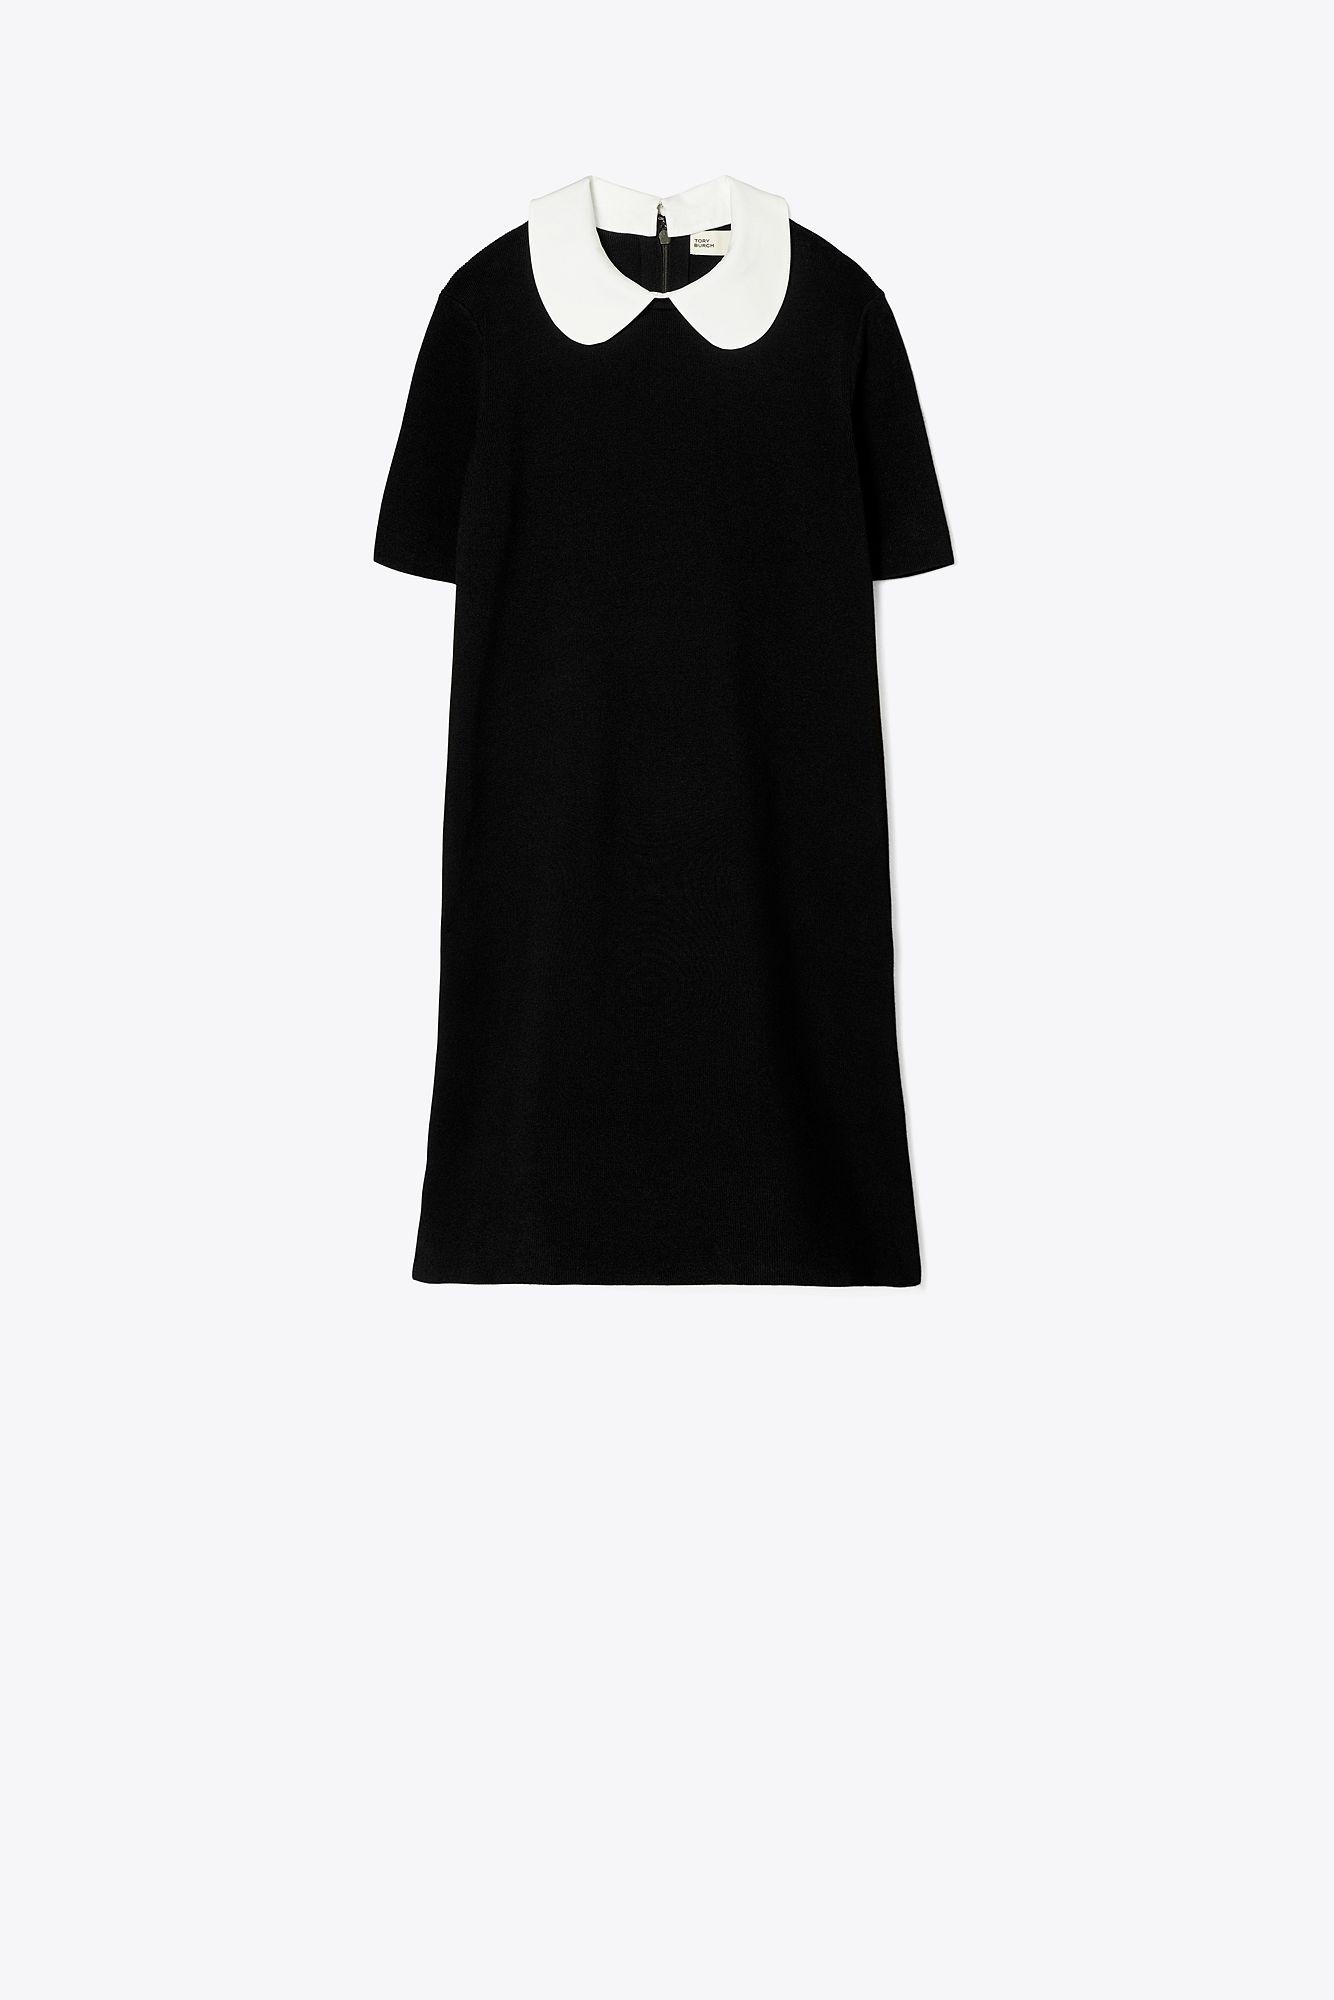 Tory Burch Poplin Collar Sweater Dress in Black | Lyst